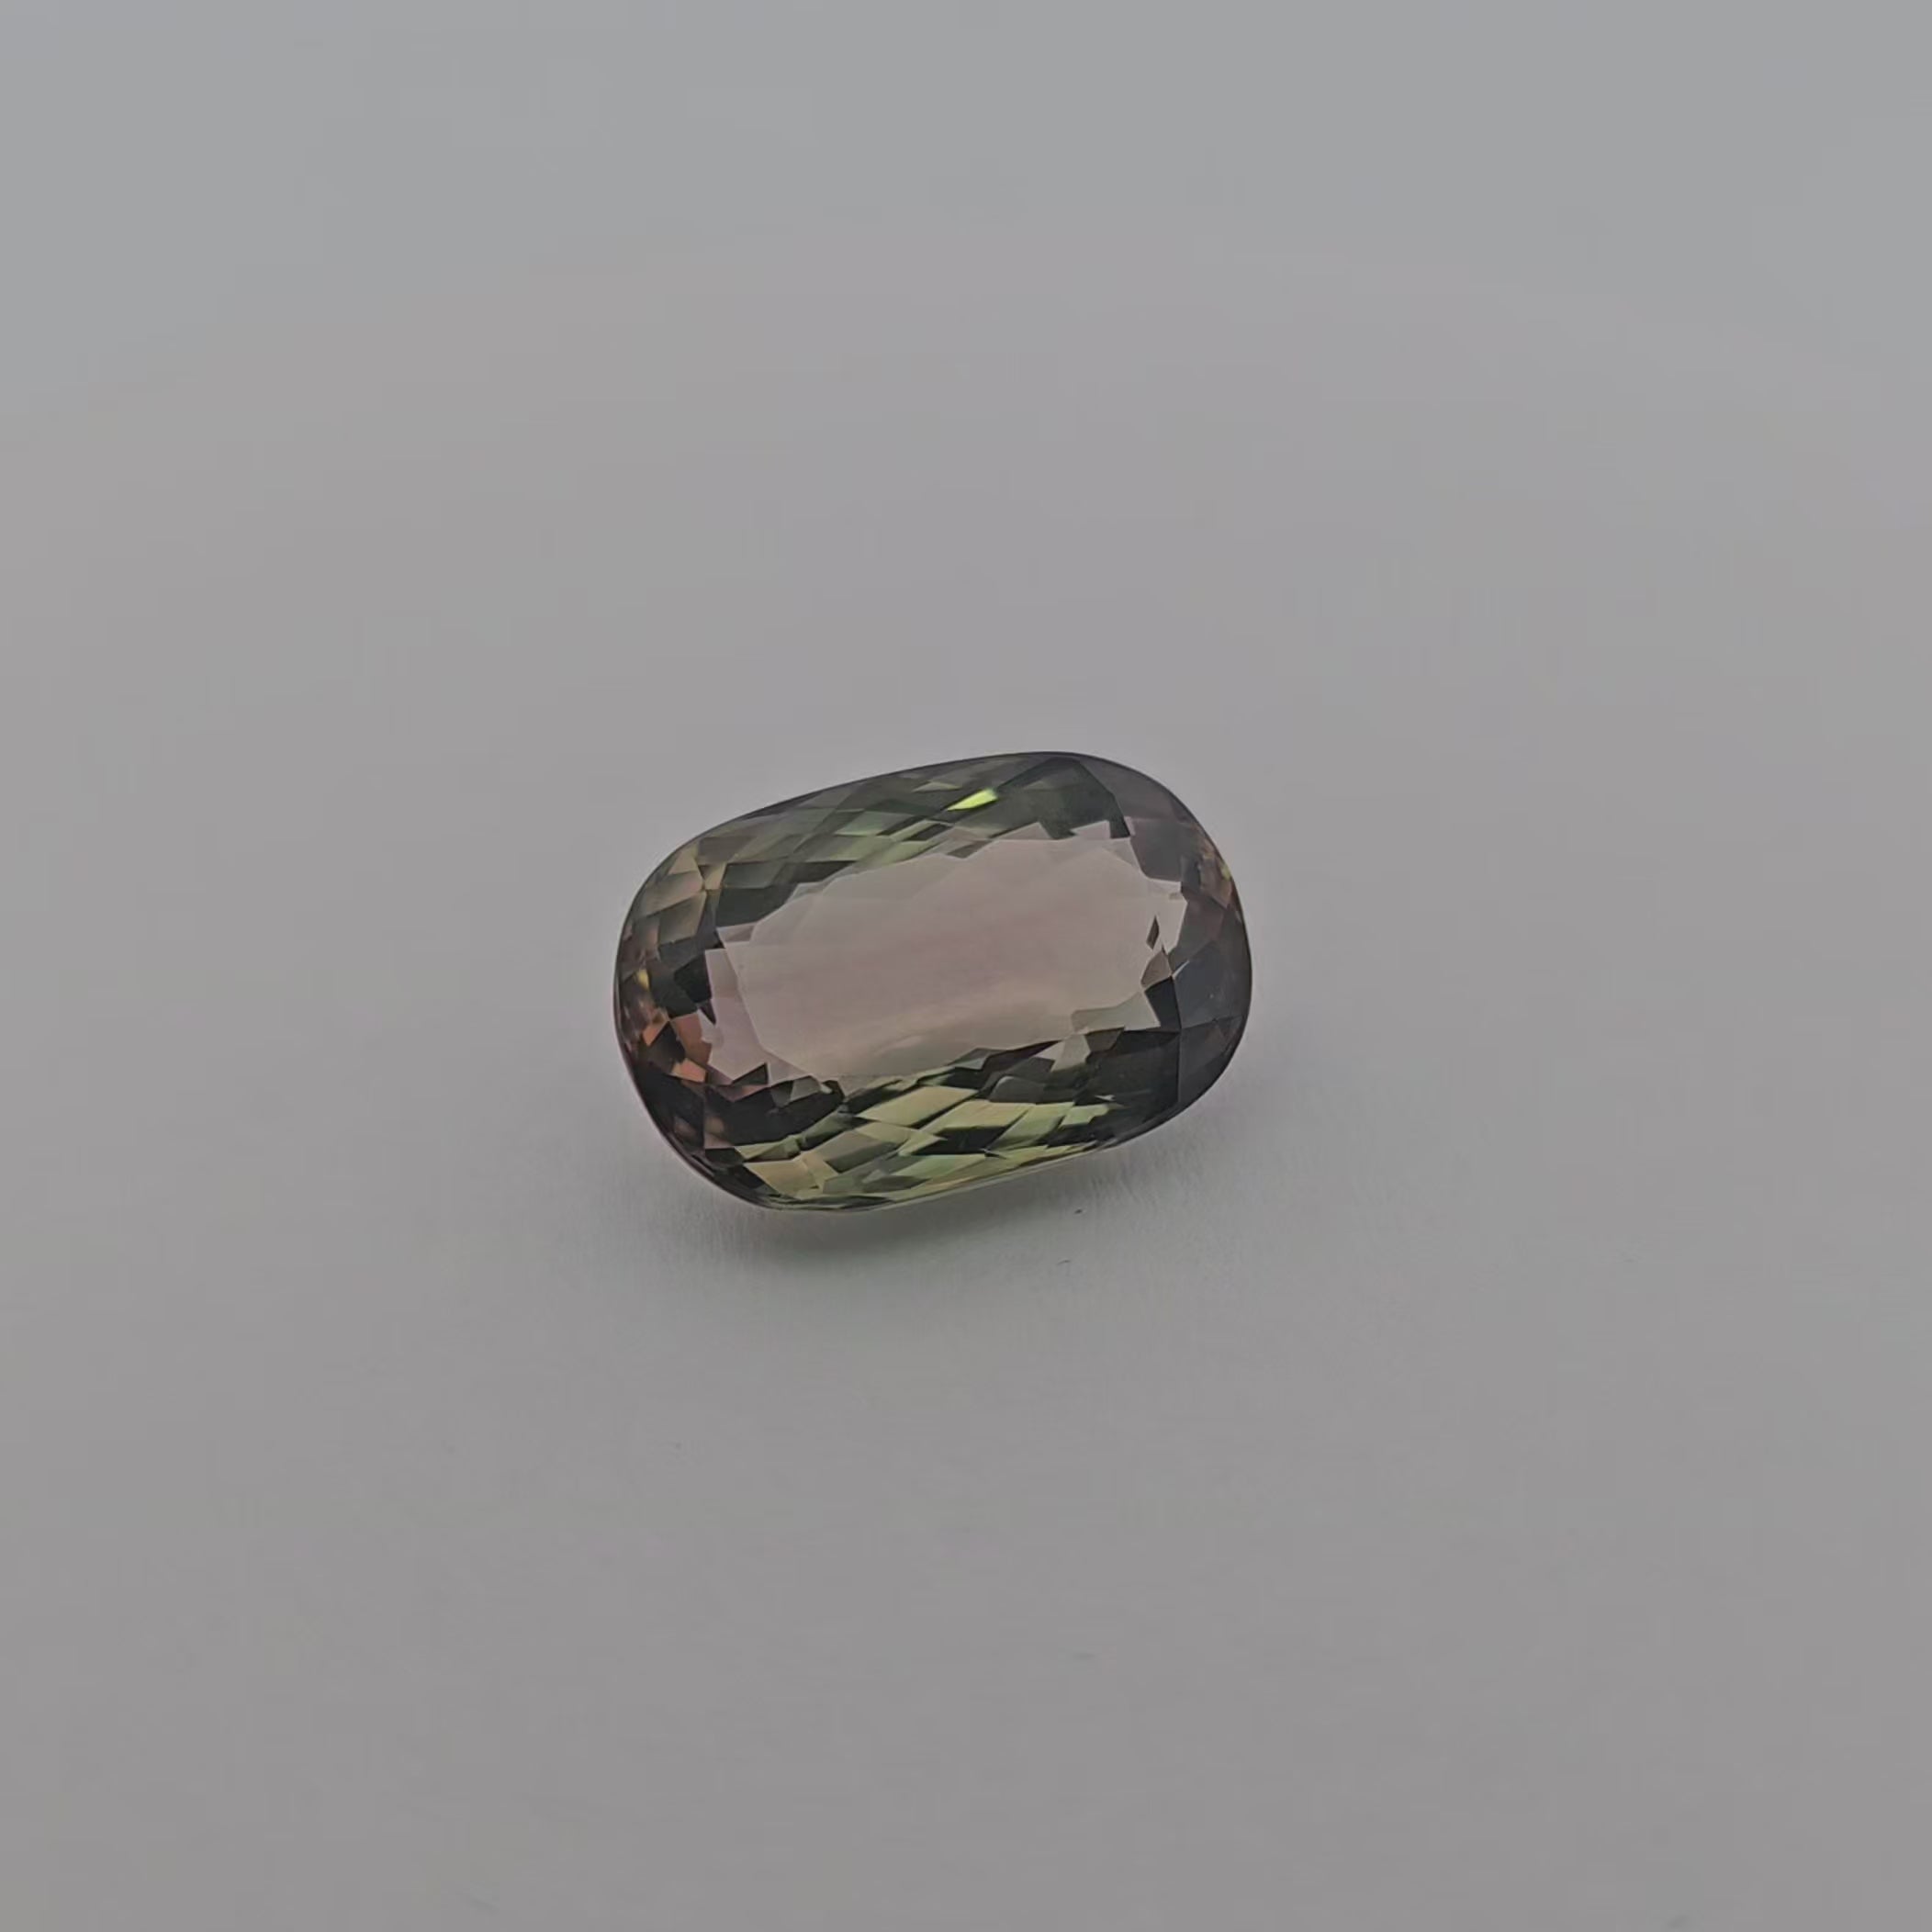  loose Natural Bi Color Tourmaline Stone 8.14 Carats Cushion Cut (15 x 10 mm)